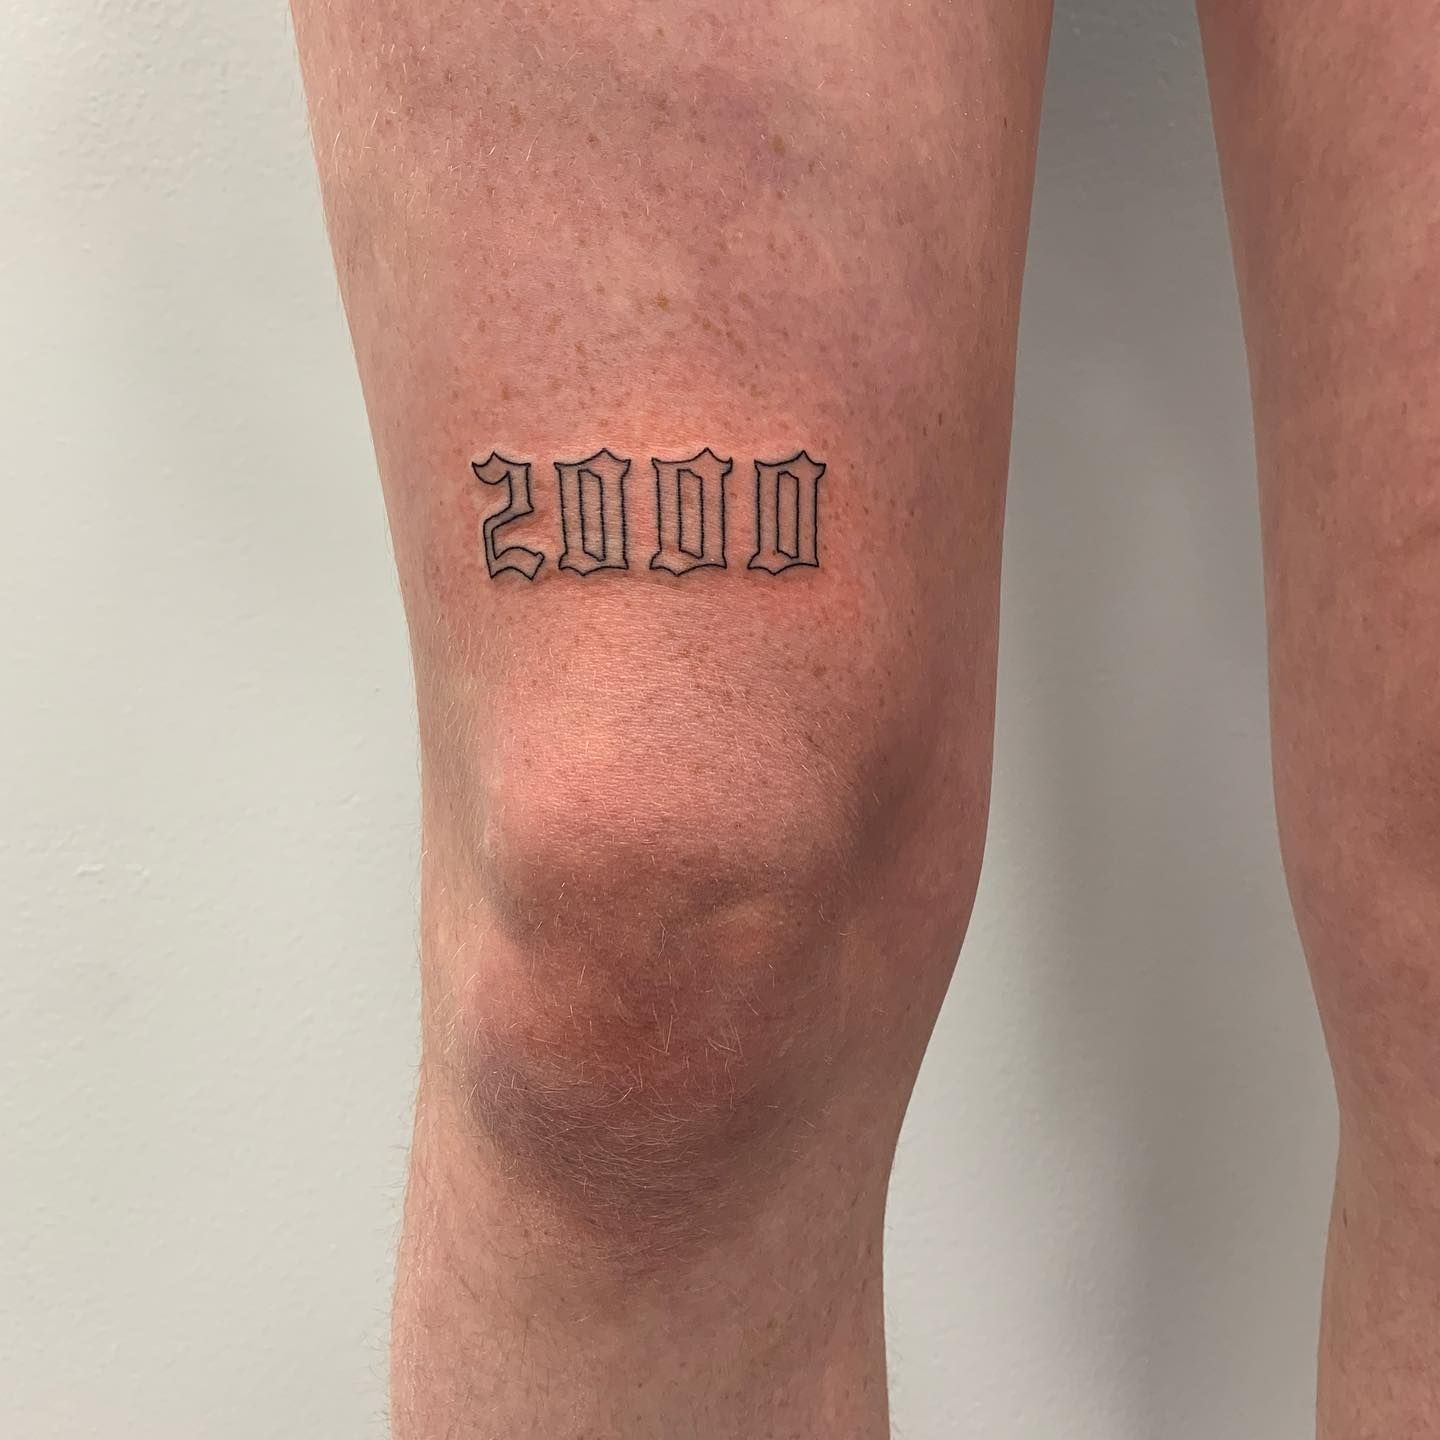 2000 above knee tattoo  Knee tattoo Flower leg tattoos Leg tattoos